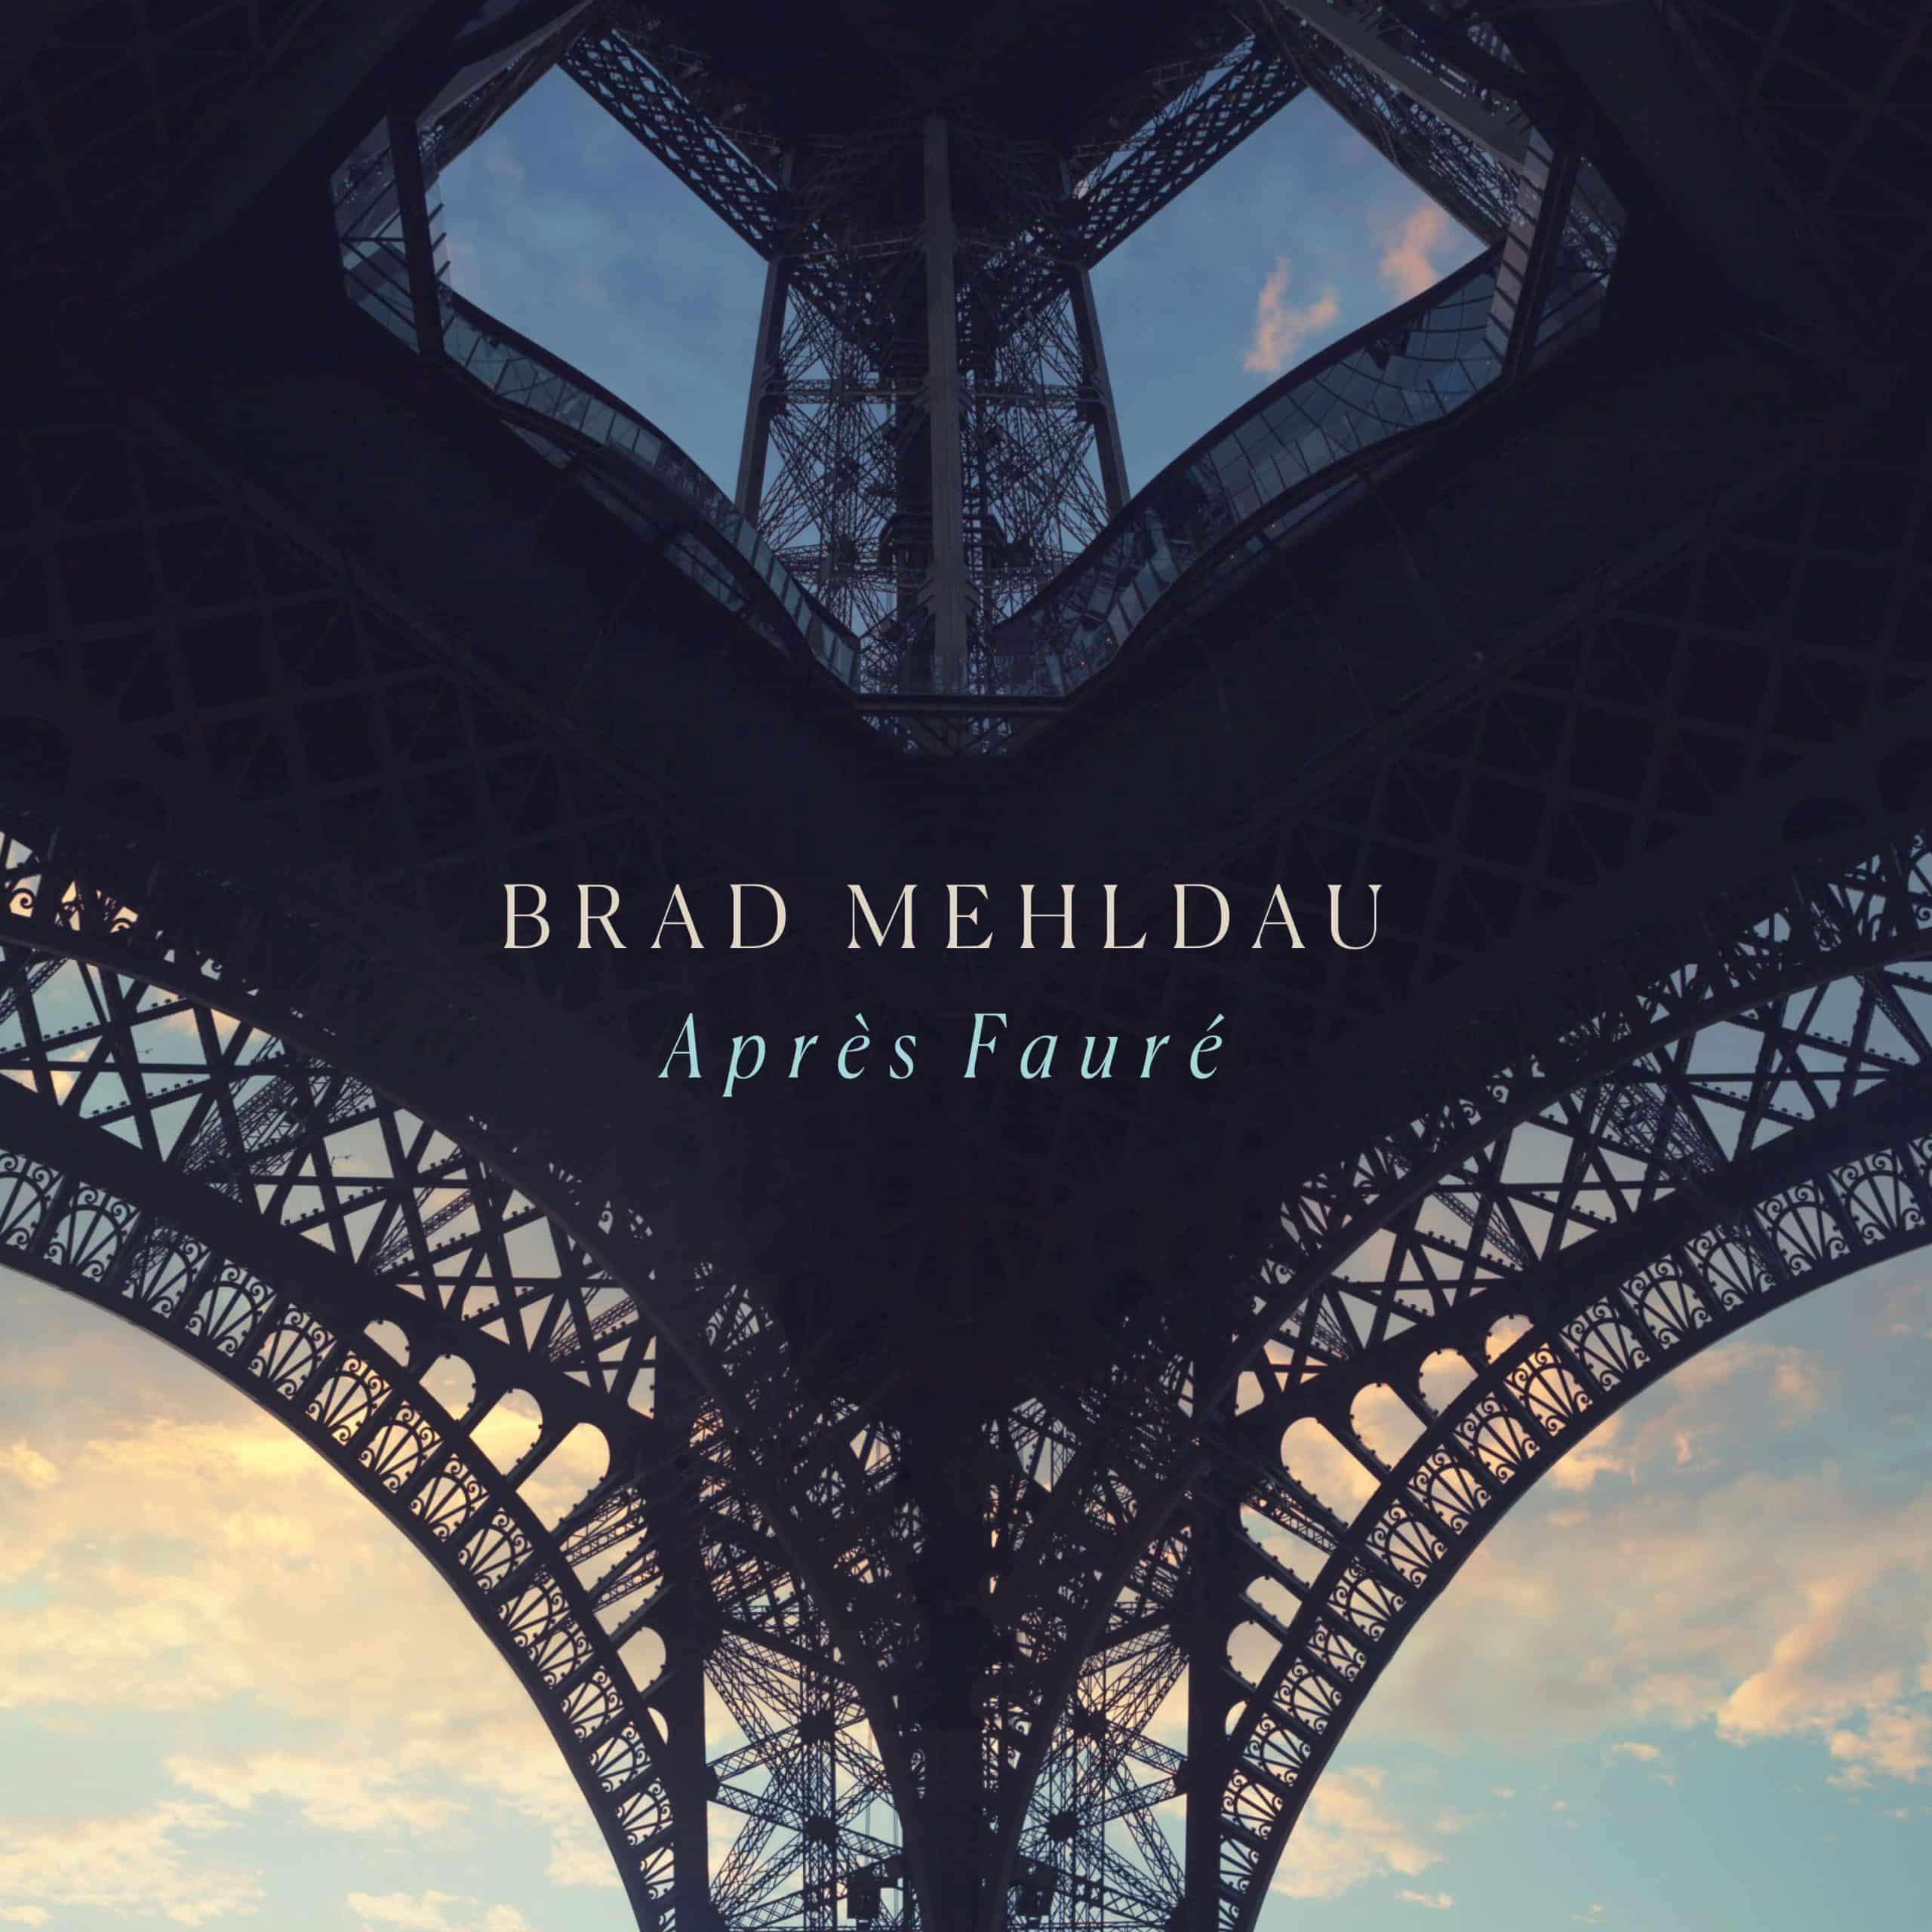 Brad Mehldau – Pre Order News!!